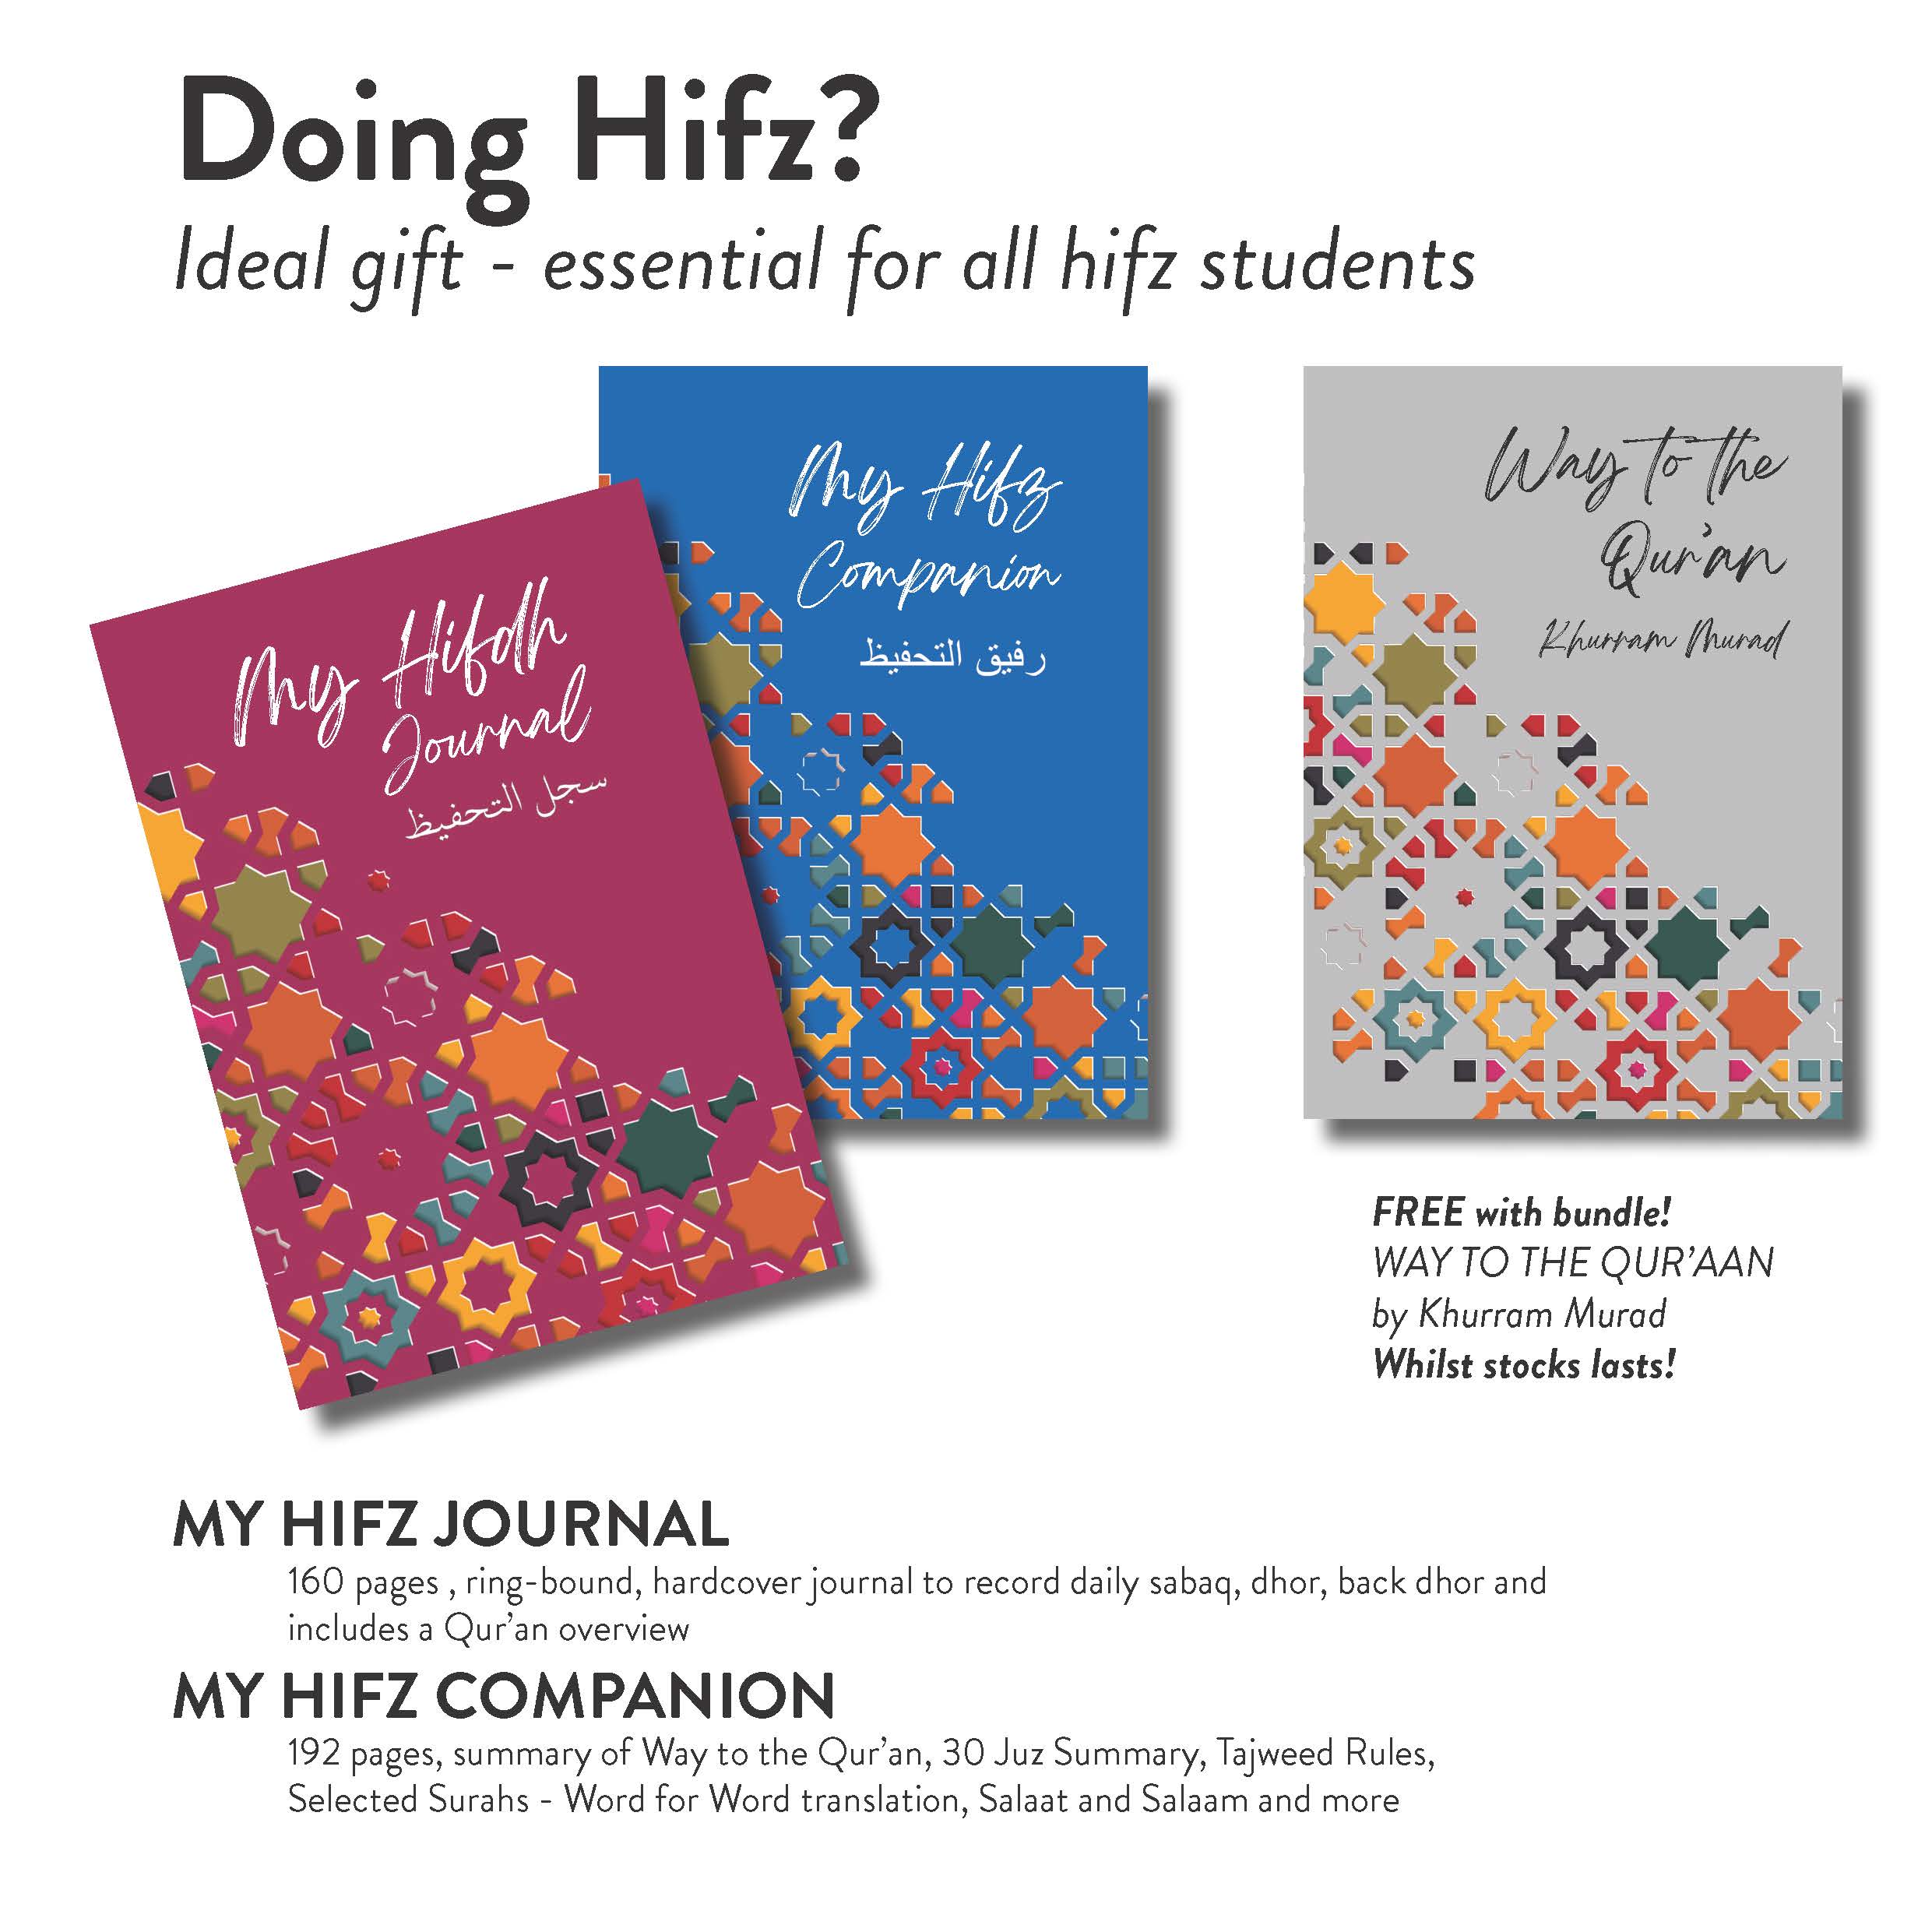 My Hifz Journal & Companion